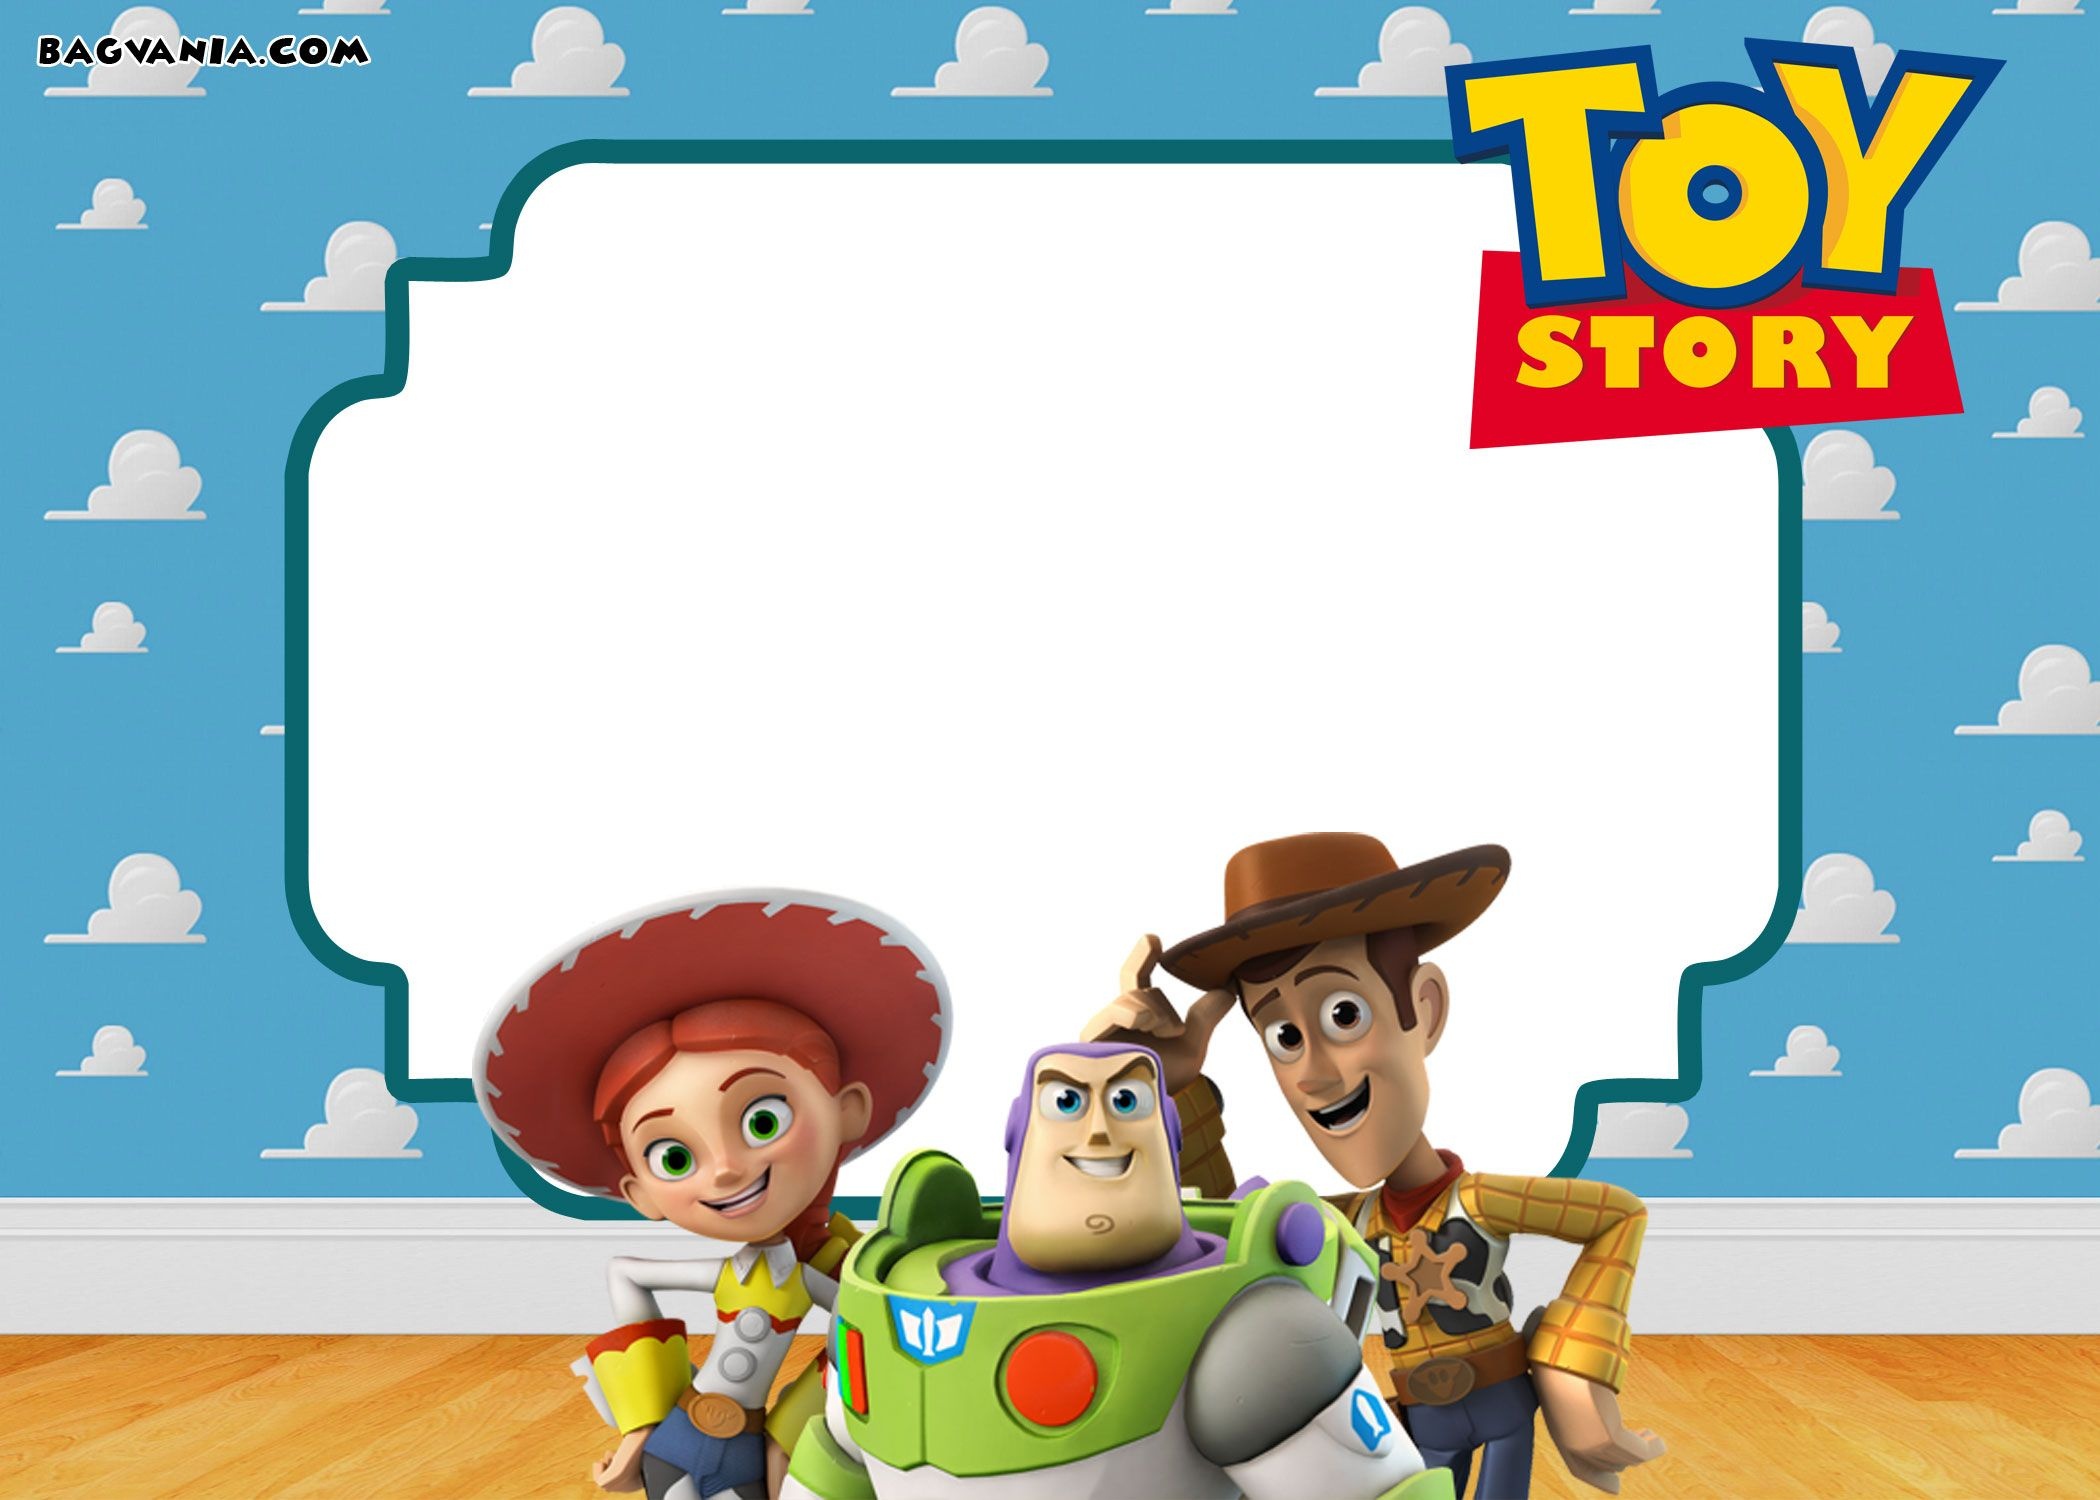 Free Printable Toy Story 3 Birthday Invitations | Free Printable - Free Printable Toy Story 3 Birthday Invitations